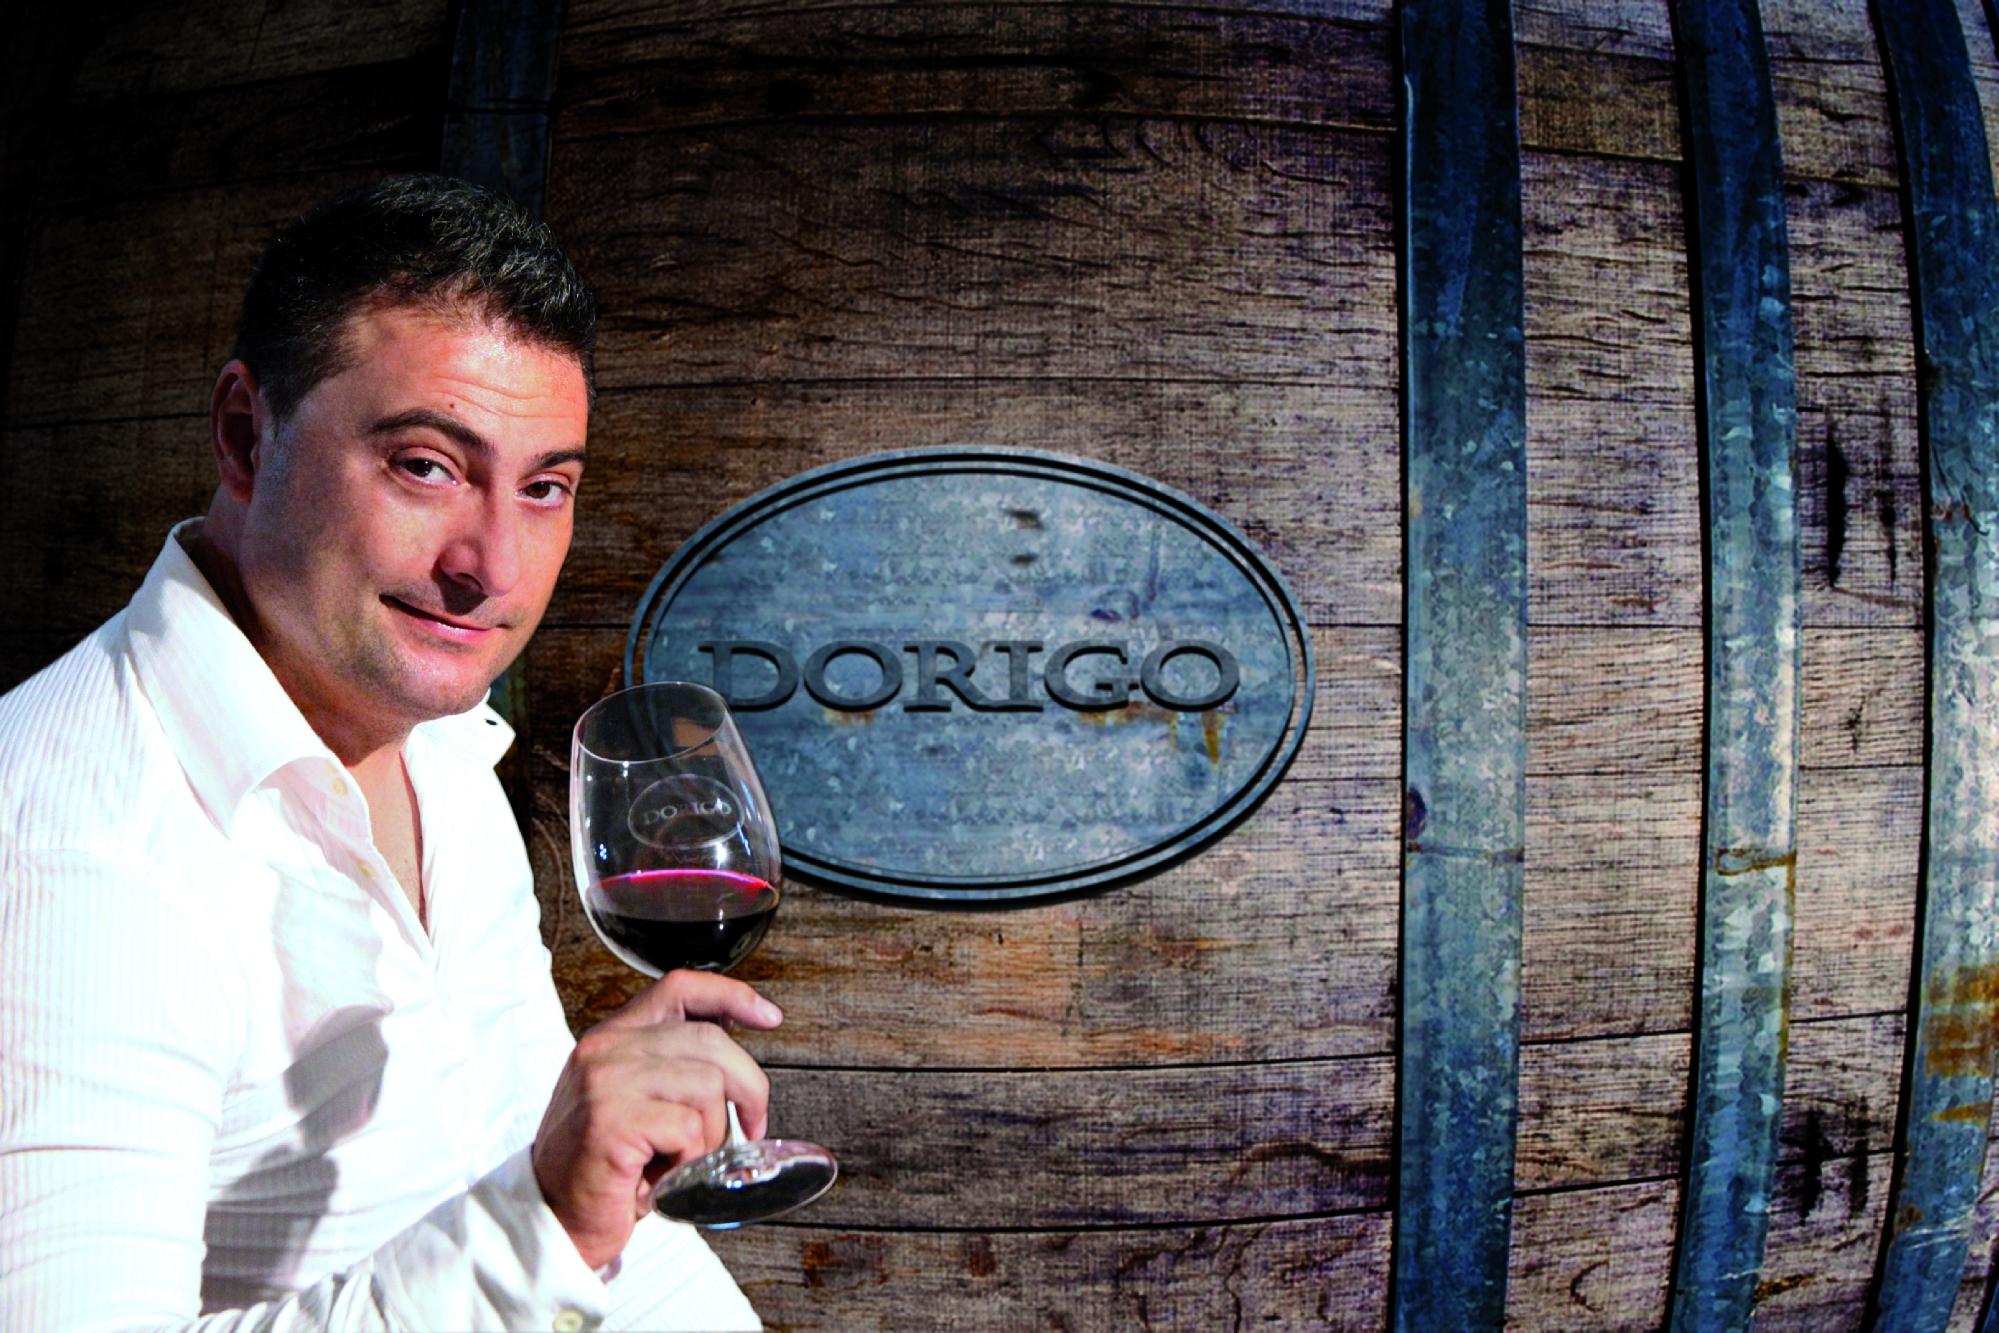 Dorigo Winery